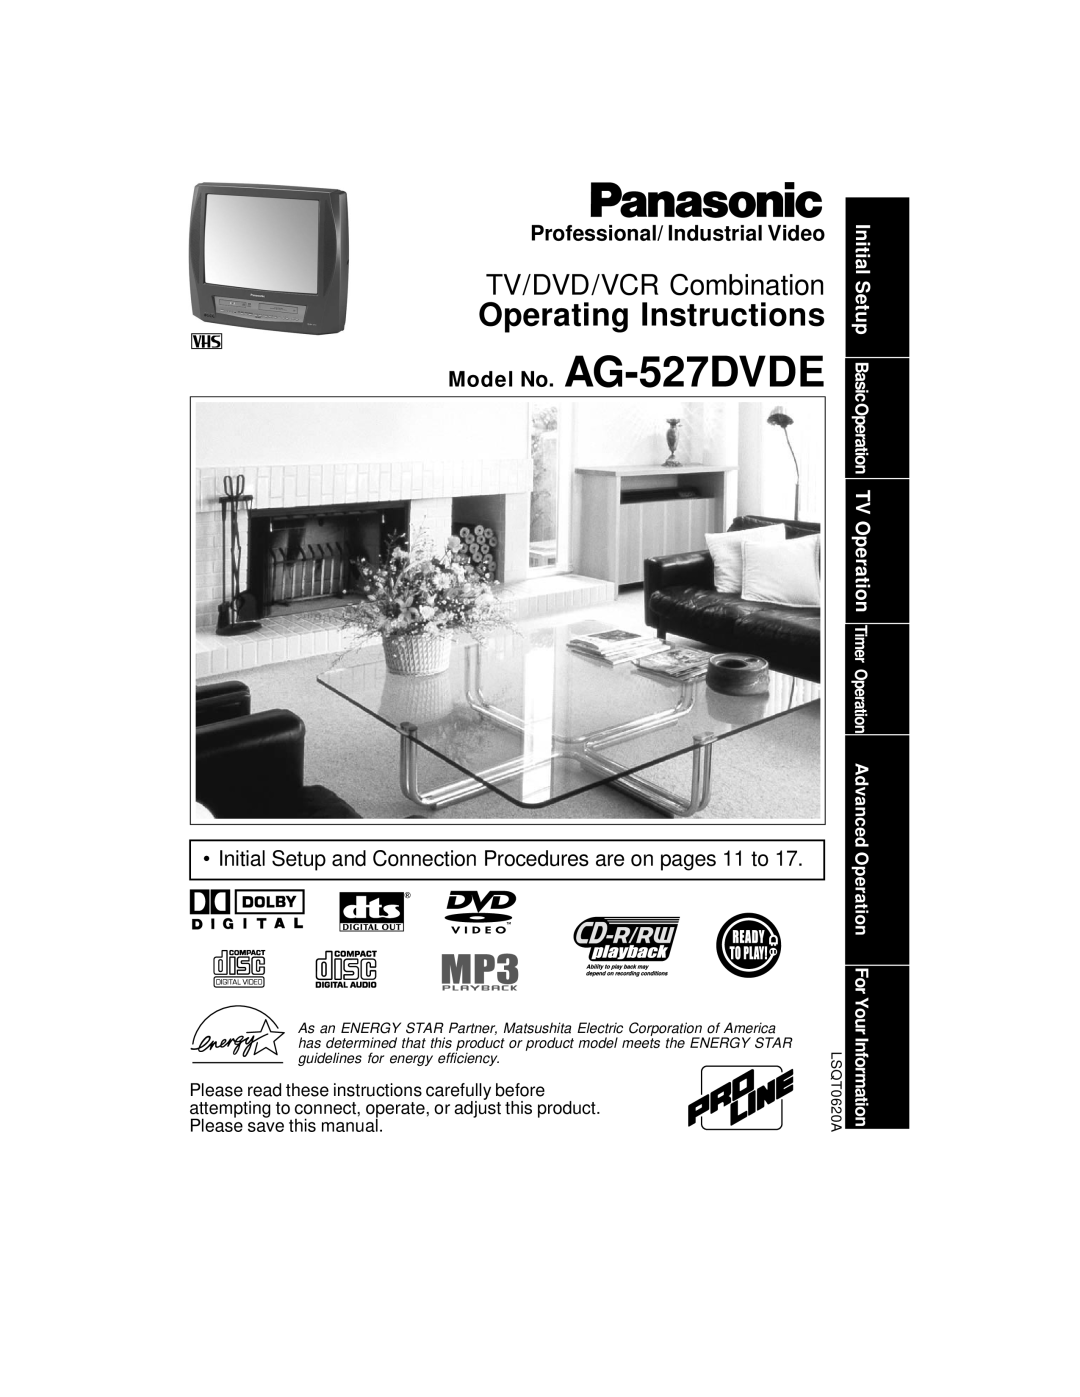 Panasonic AG 527DVDE manual TV/DVD/VCR Combination, Professional/ Industrial Video, Model No. AG-527DVDE 